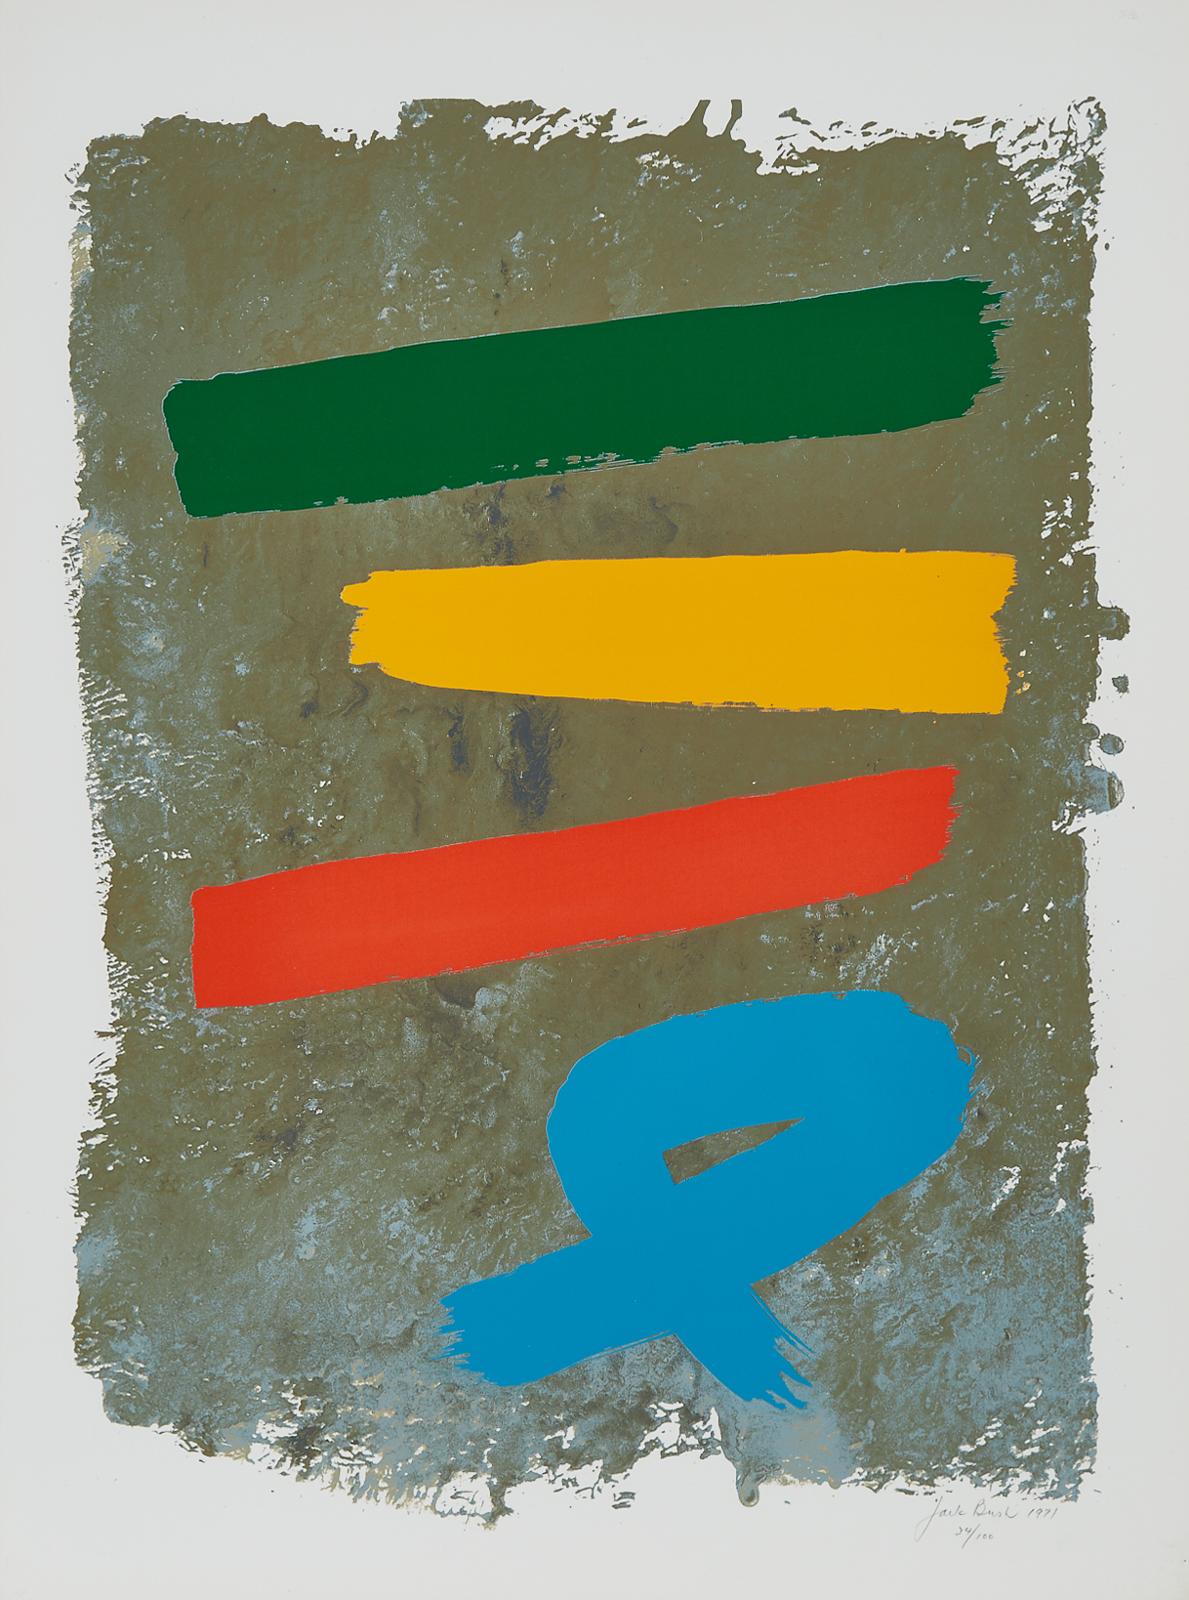 Jack Hamilton Bush (1909-1977) - Three And Blue Loop, 1971